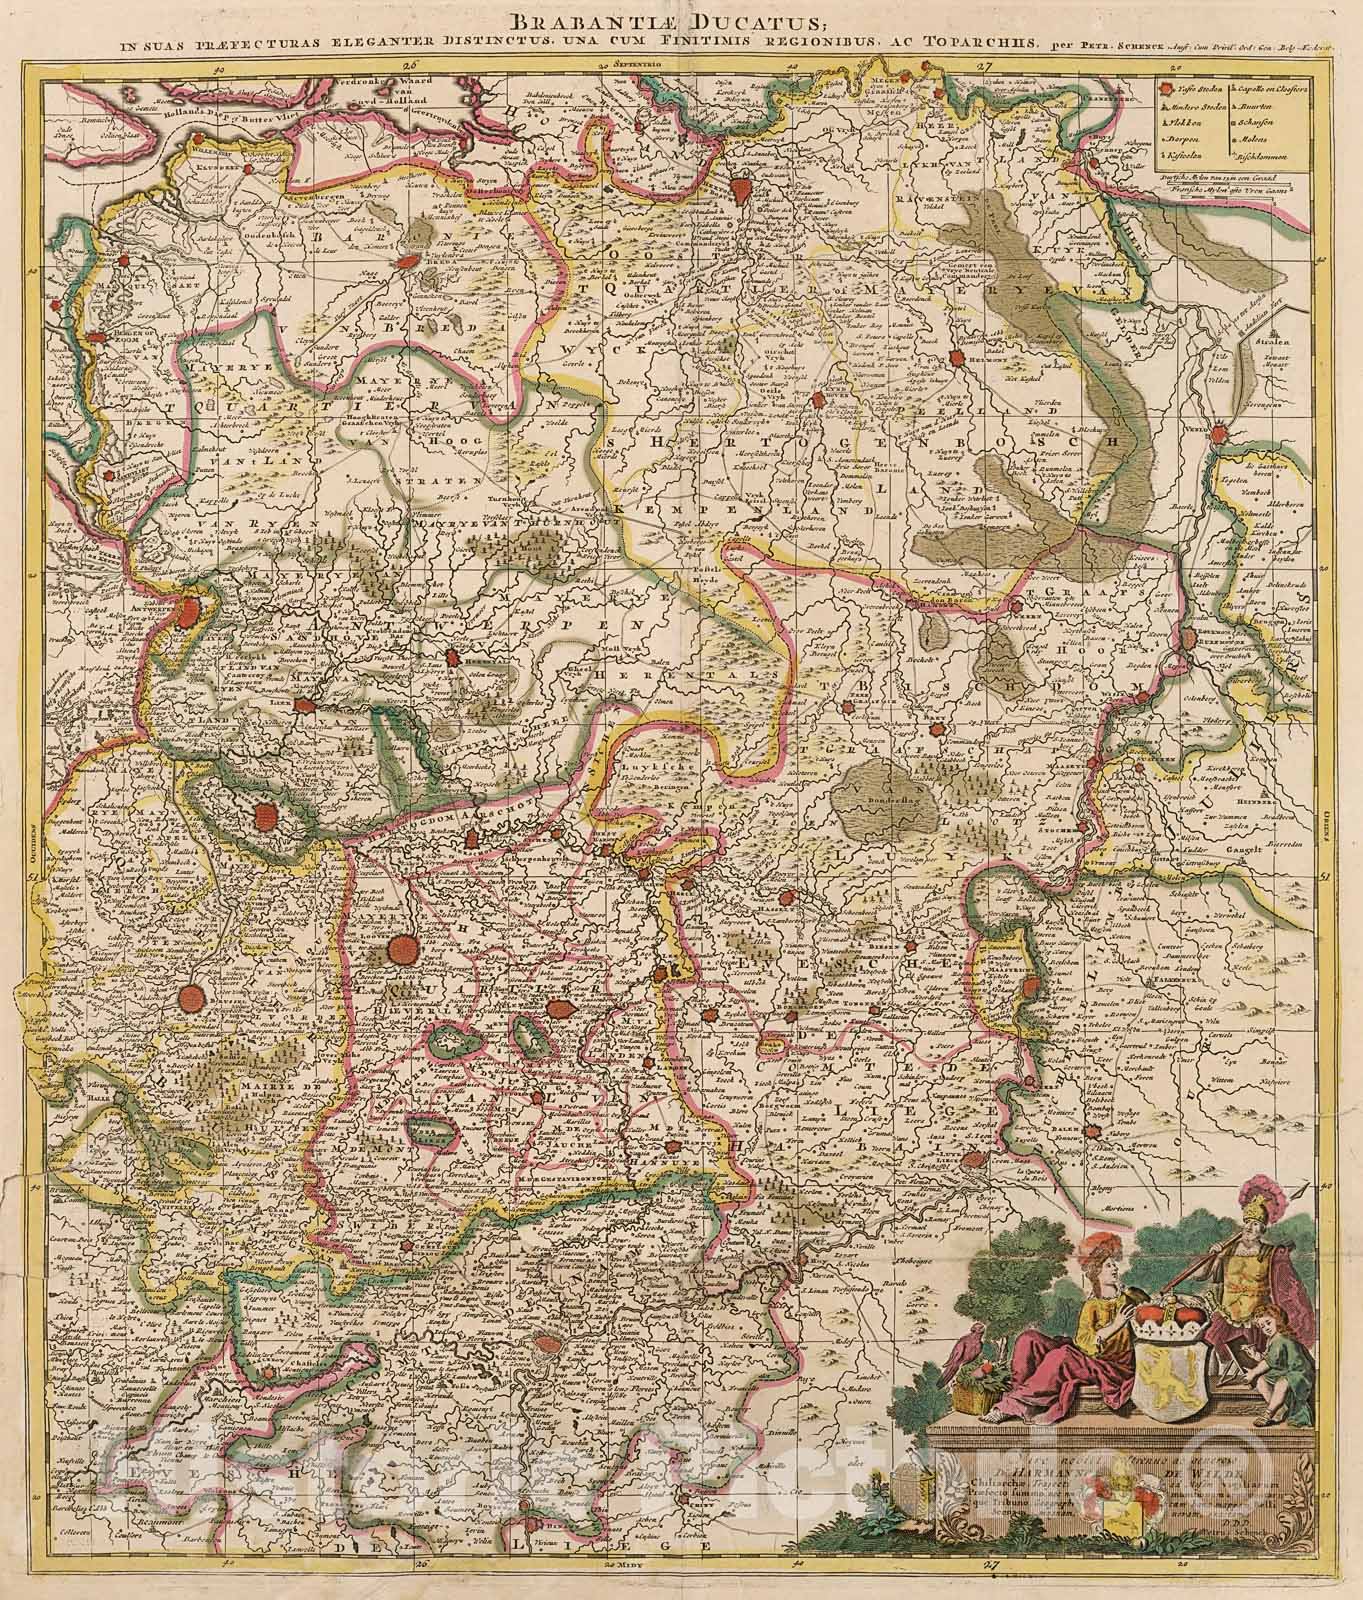 Historic Map : Brabantiae Ducatus., 1716, Vintage Wall Decor